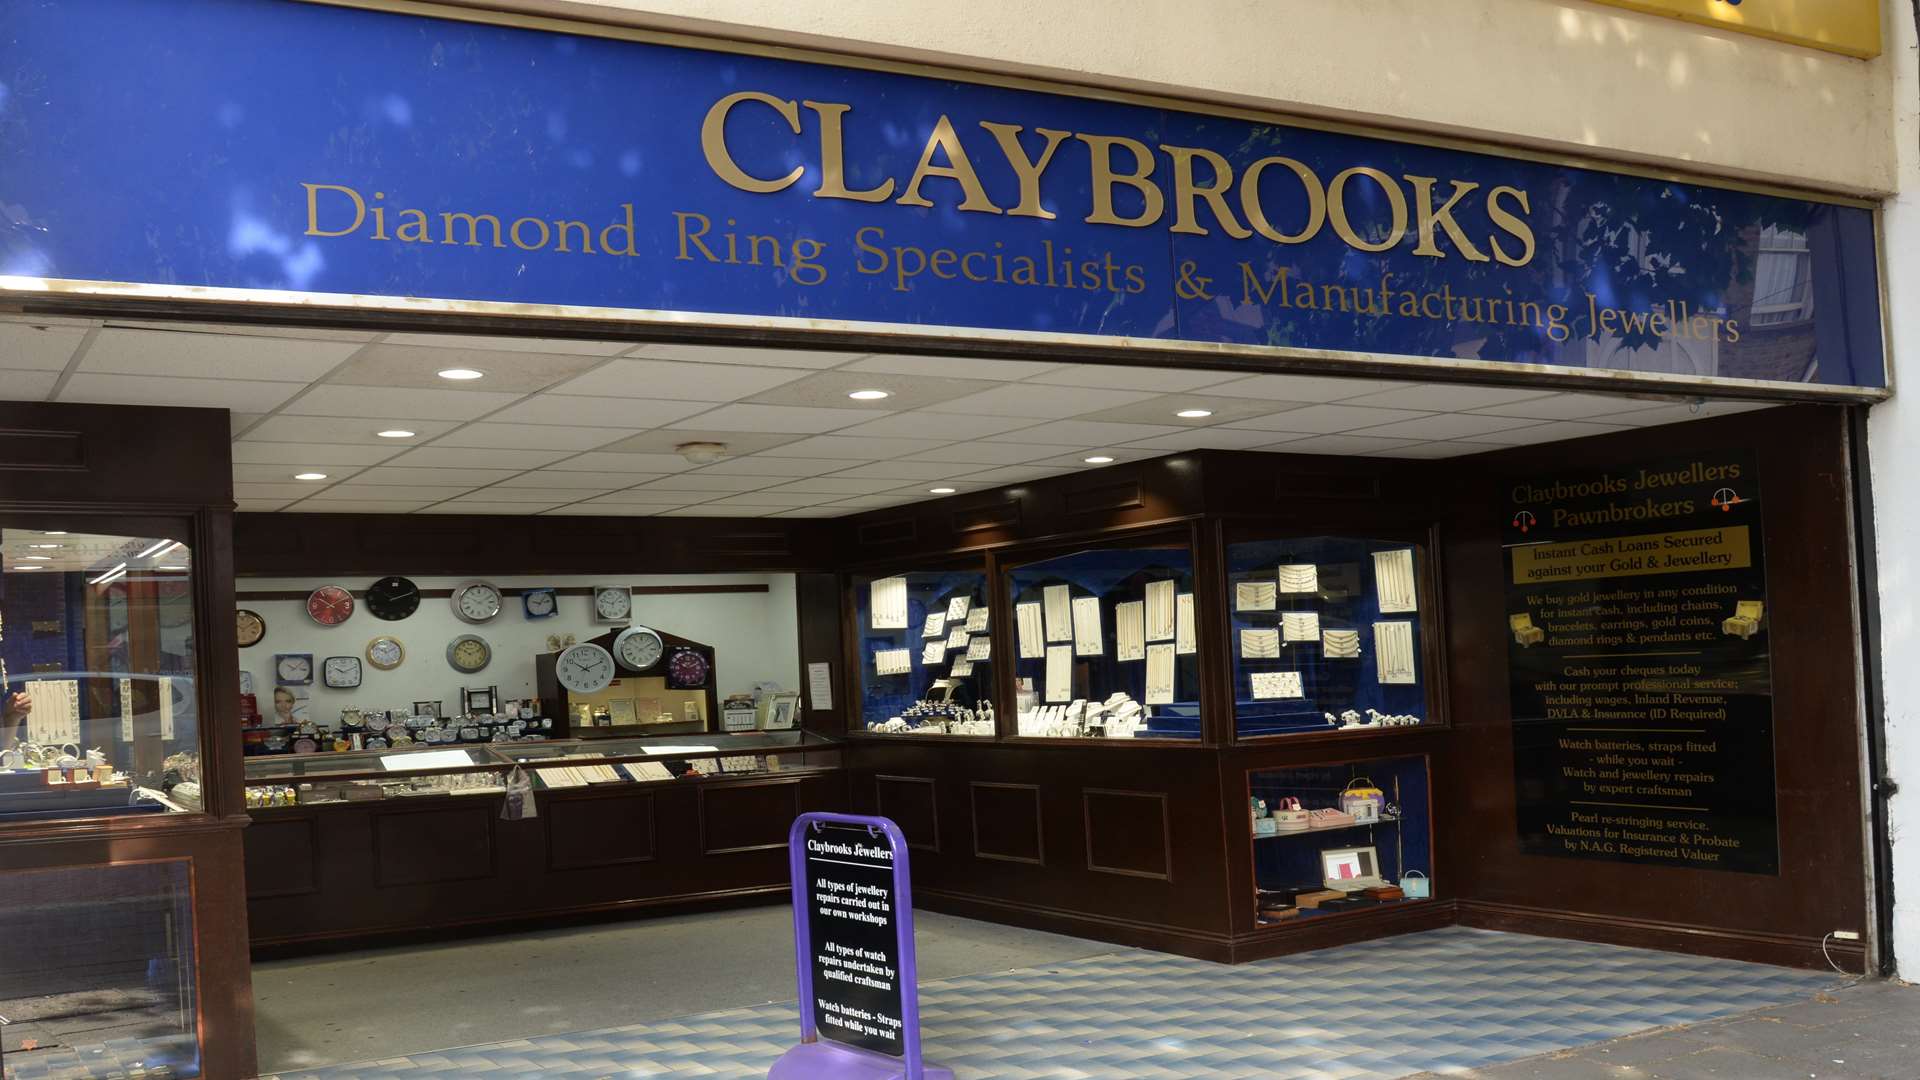 Claybrooks jewellers was raided